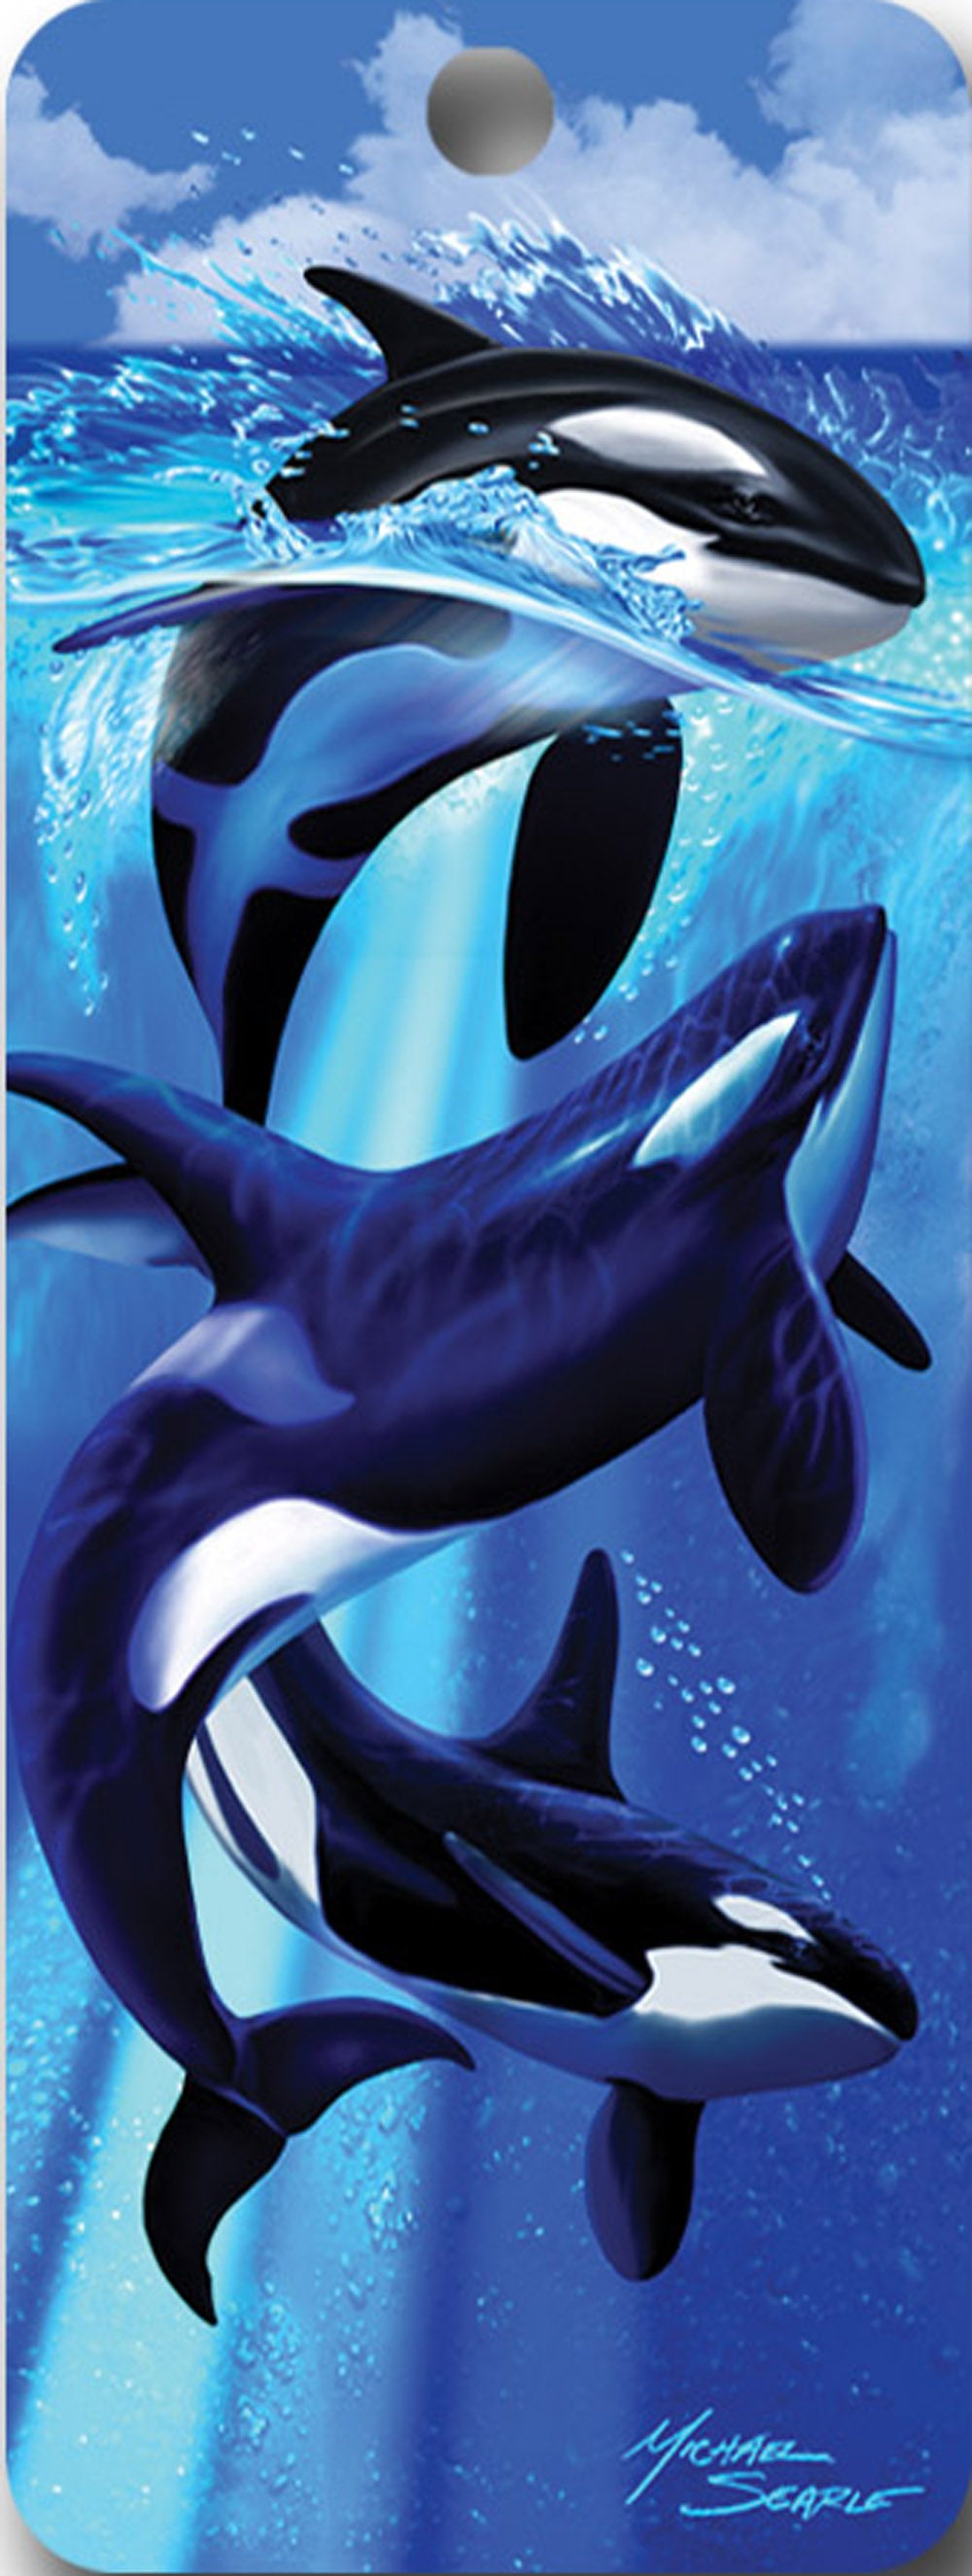 SKU : 16524 - Orcas - 3D Bookmark